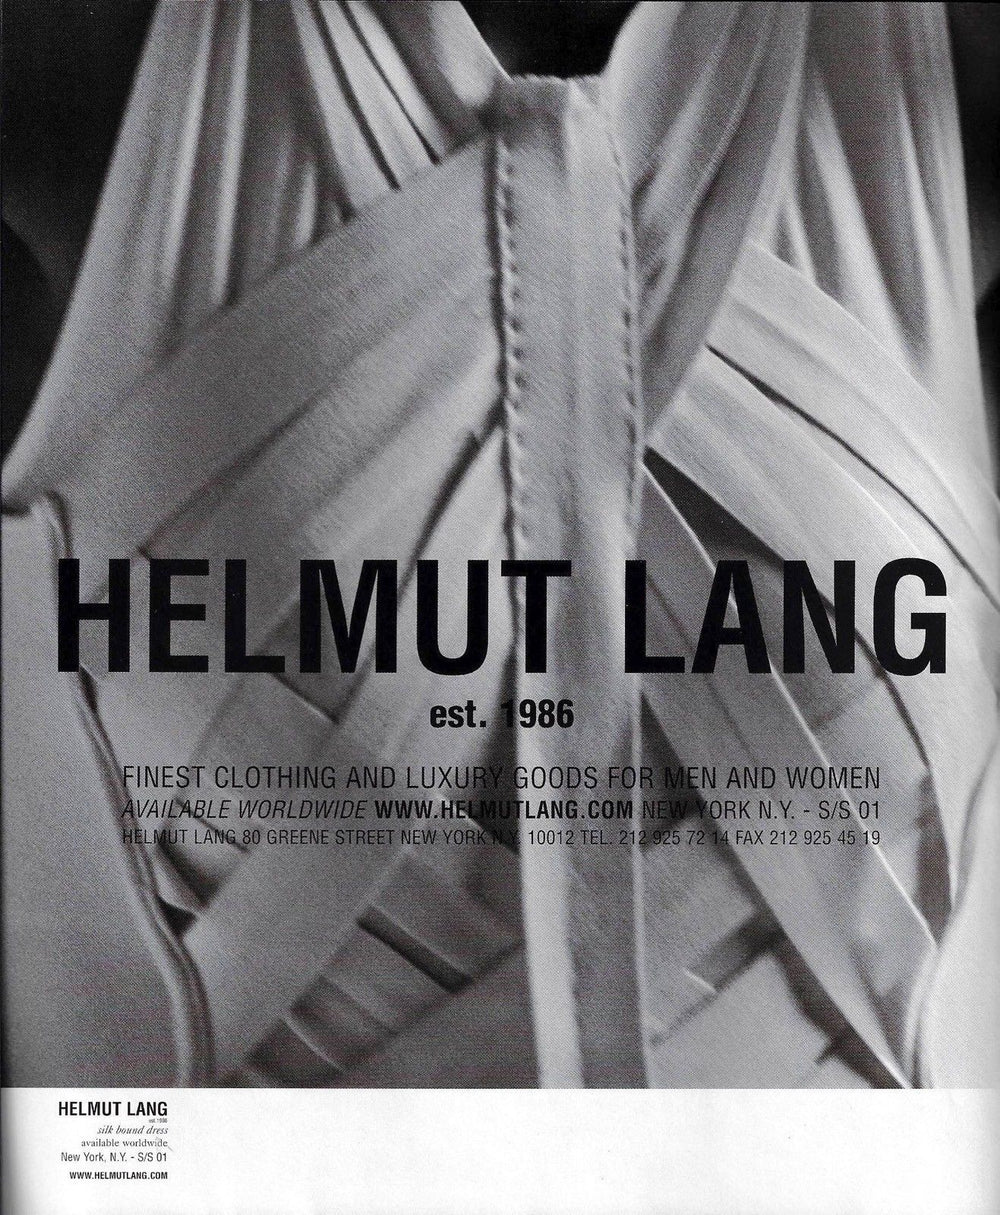 Helmut Lang SS01 Cross Strap Bound Dress